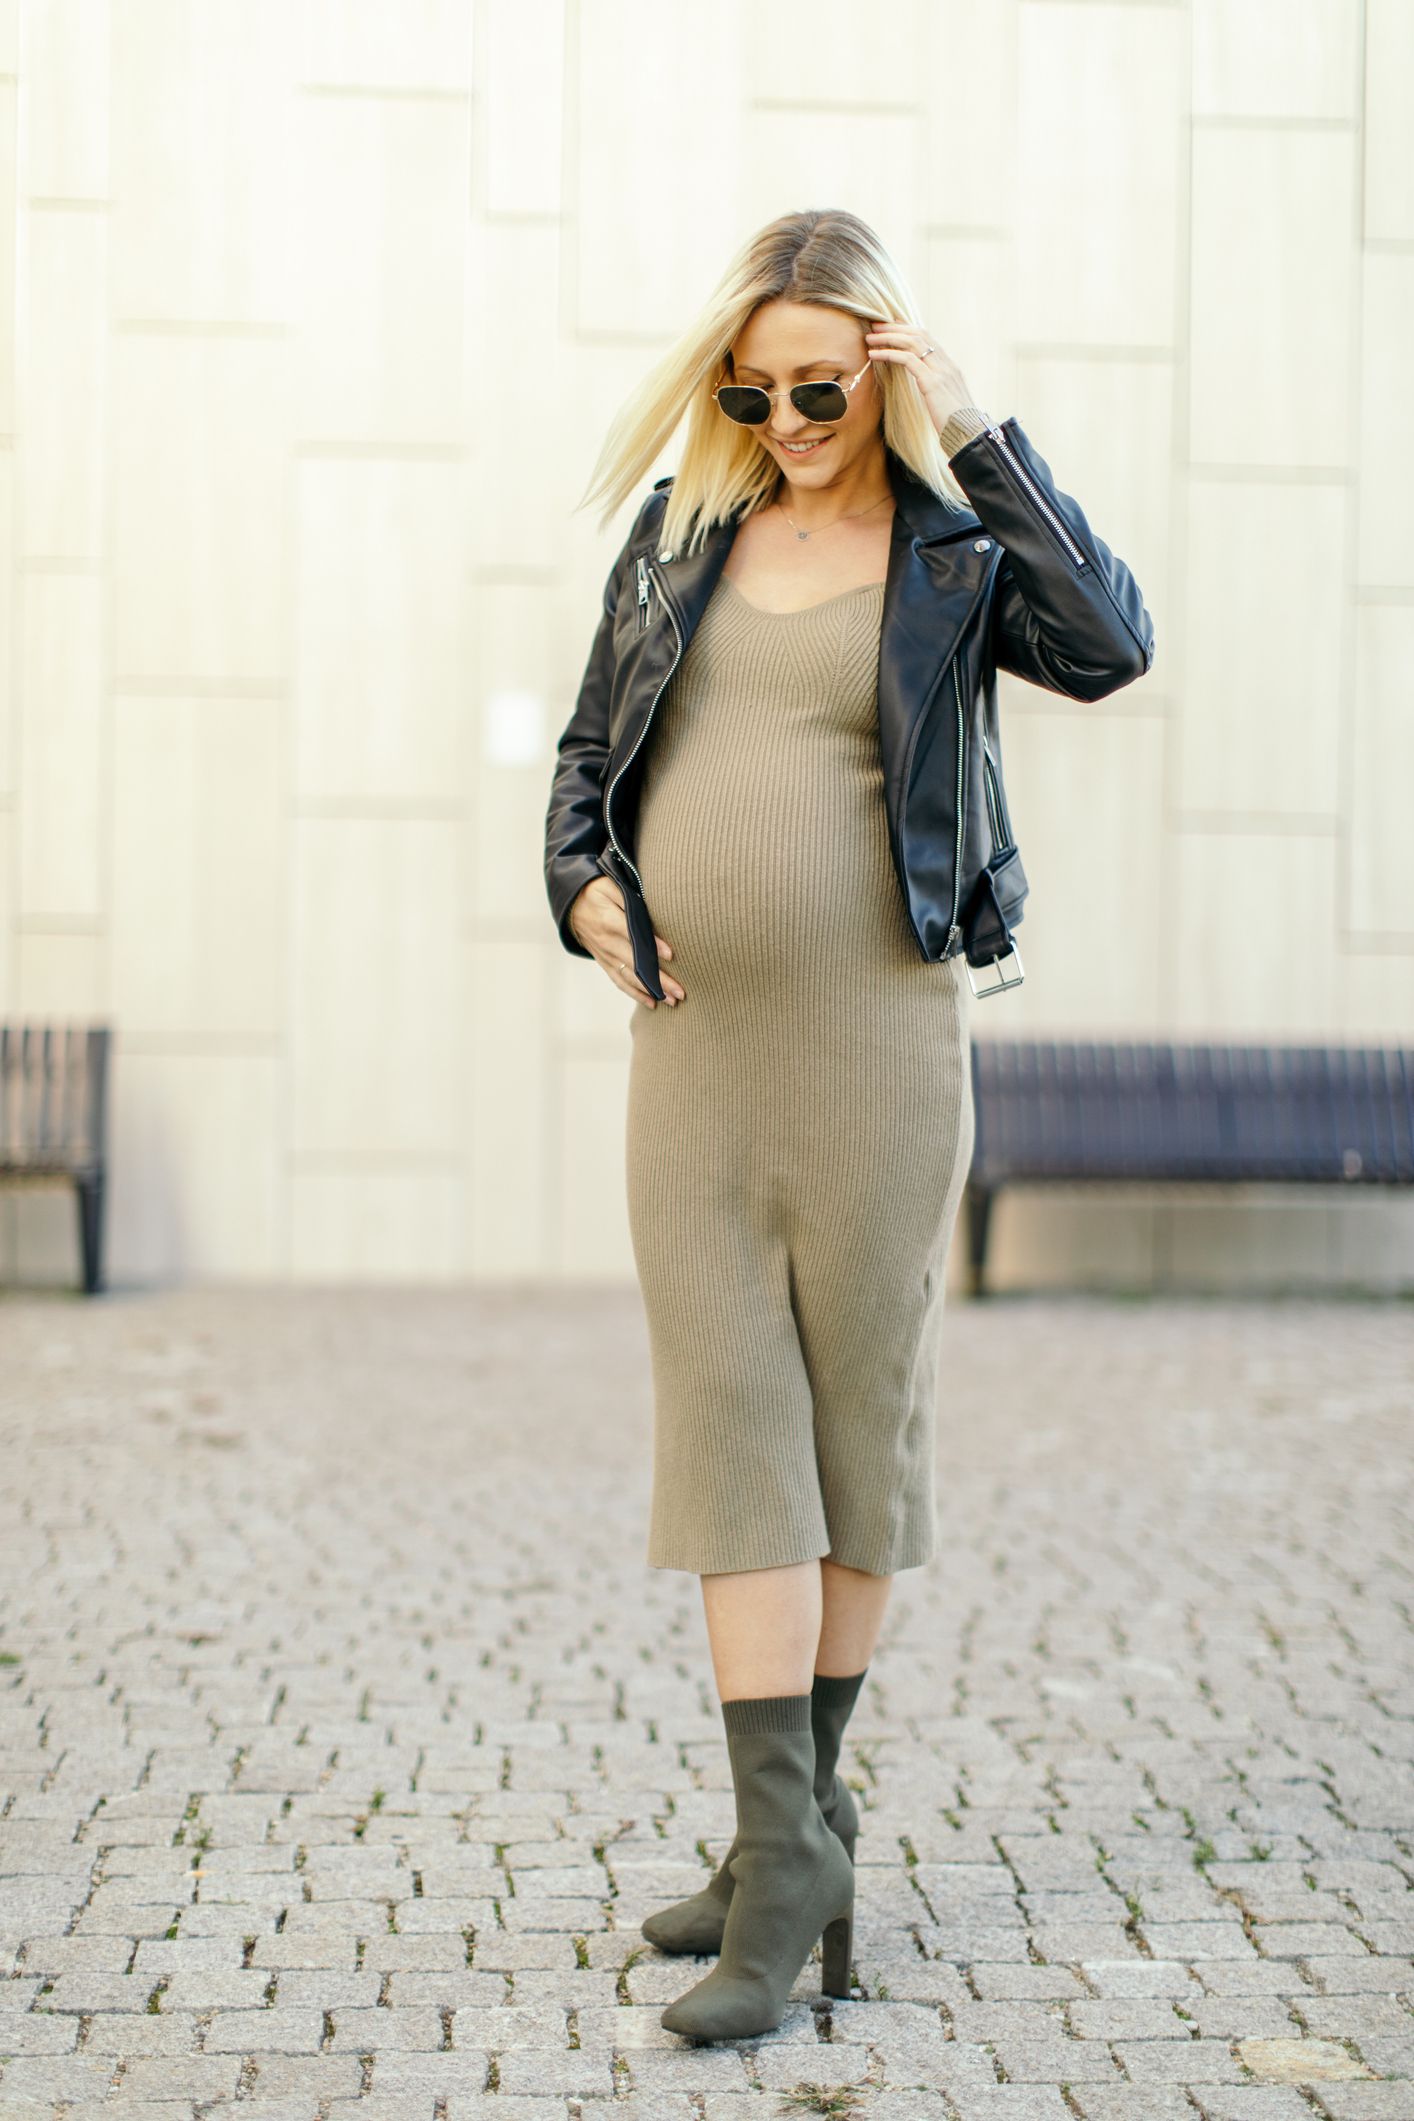 Leggings Depot Women's Maternity Pants Over The Belly Pregnancy